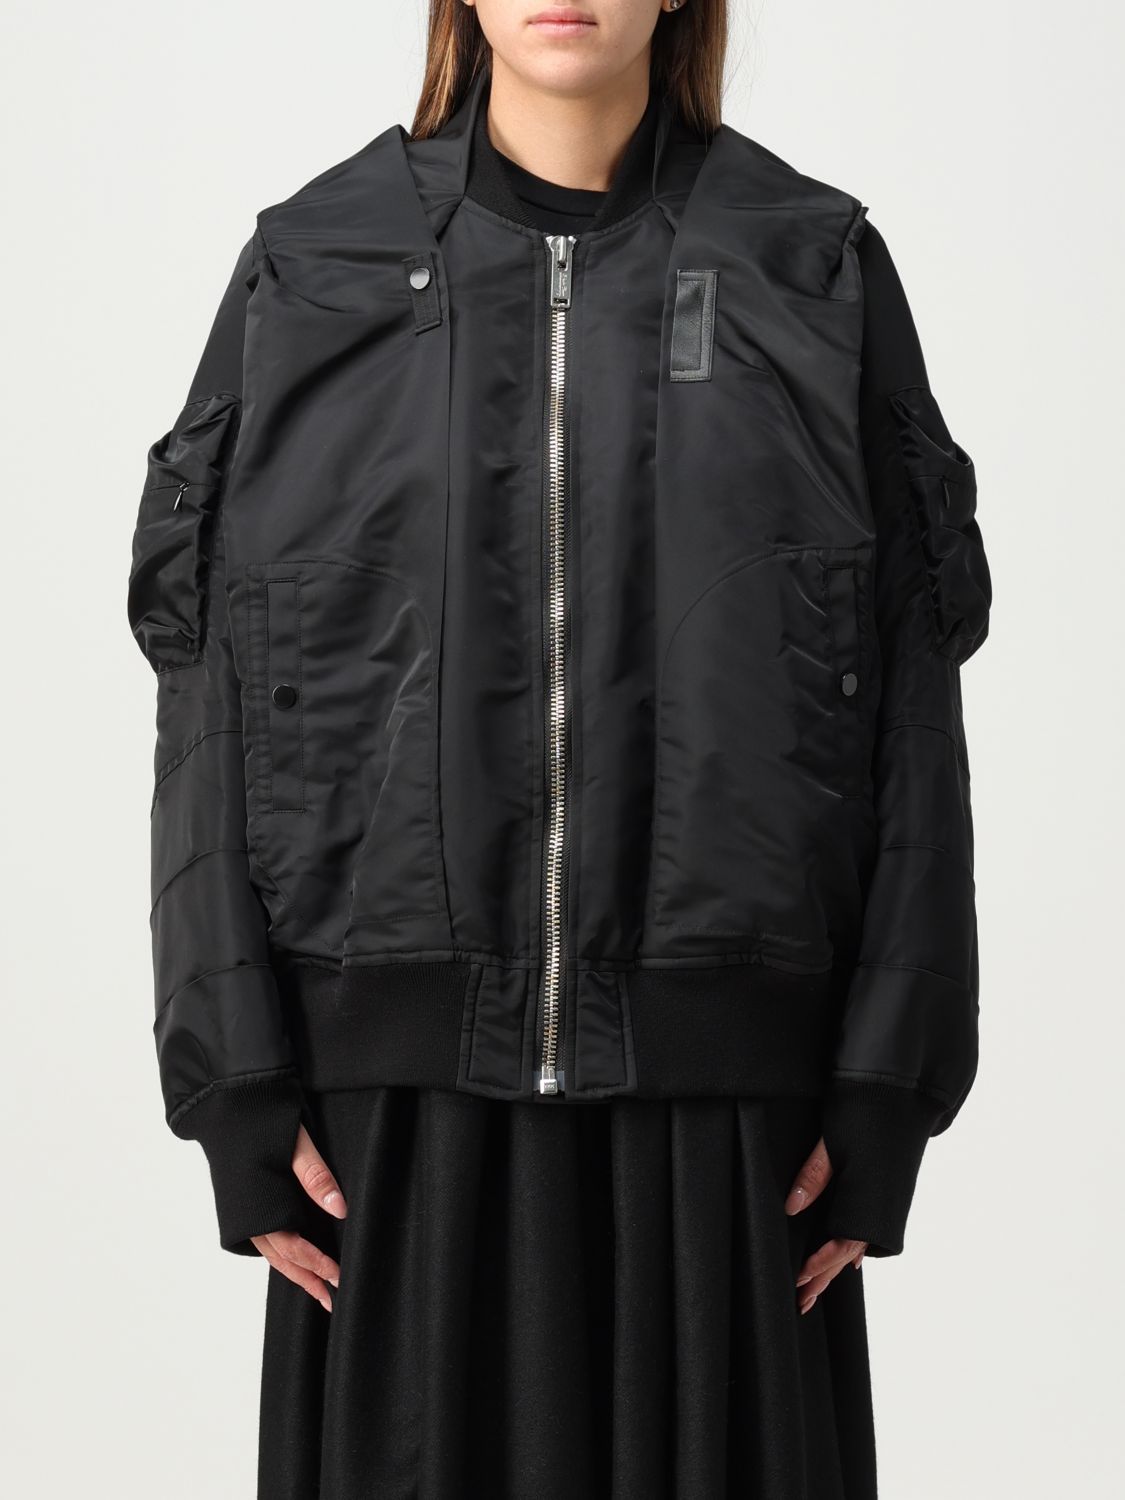 Undercover Jacket UNDERCOVER Woman colour Black